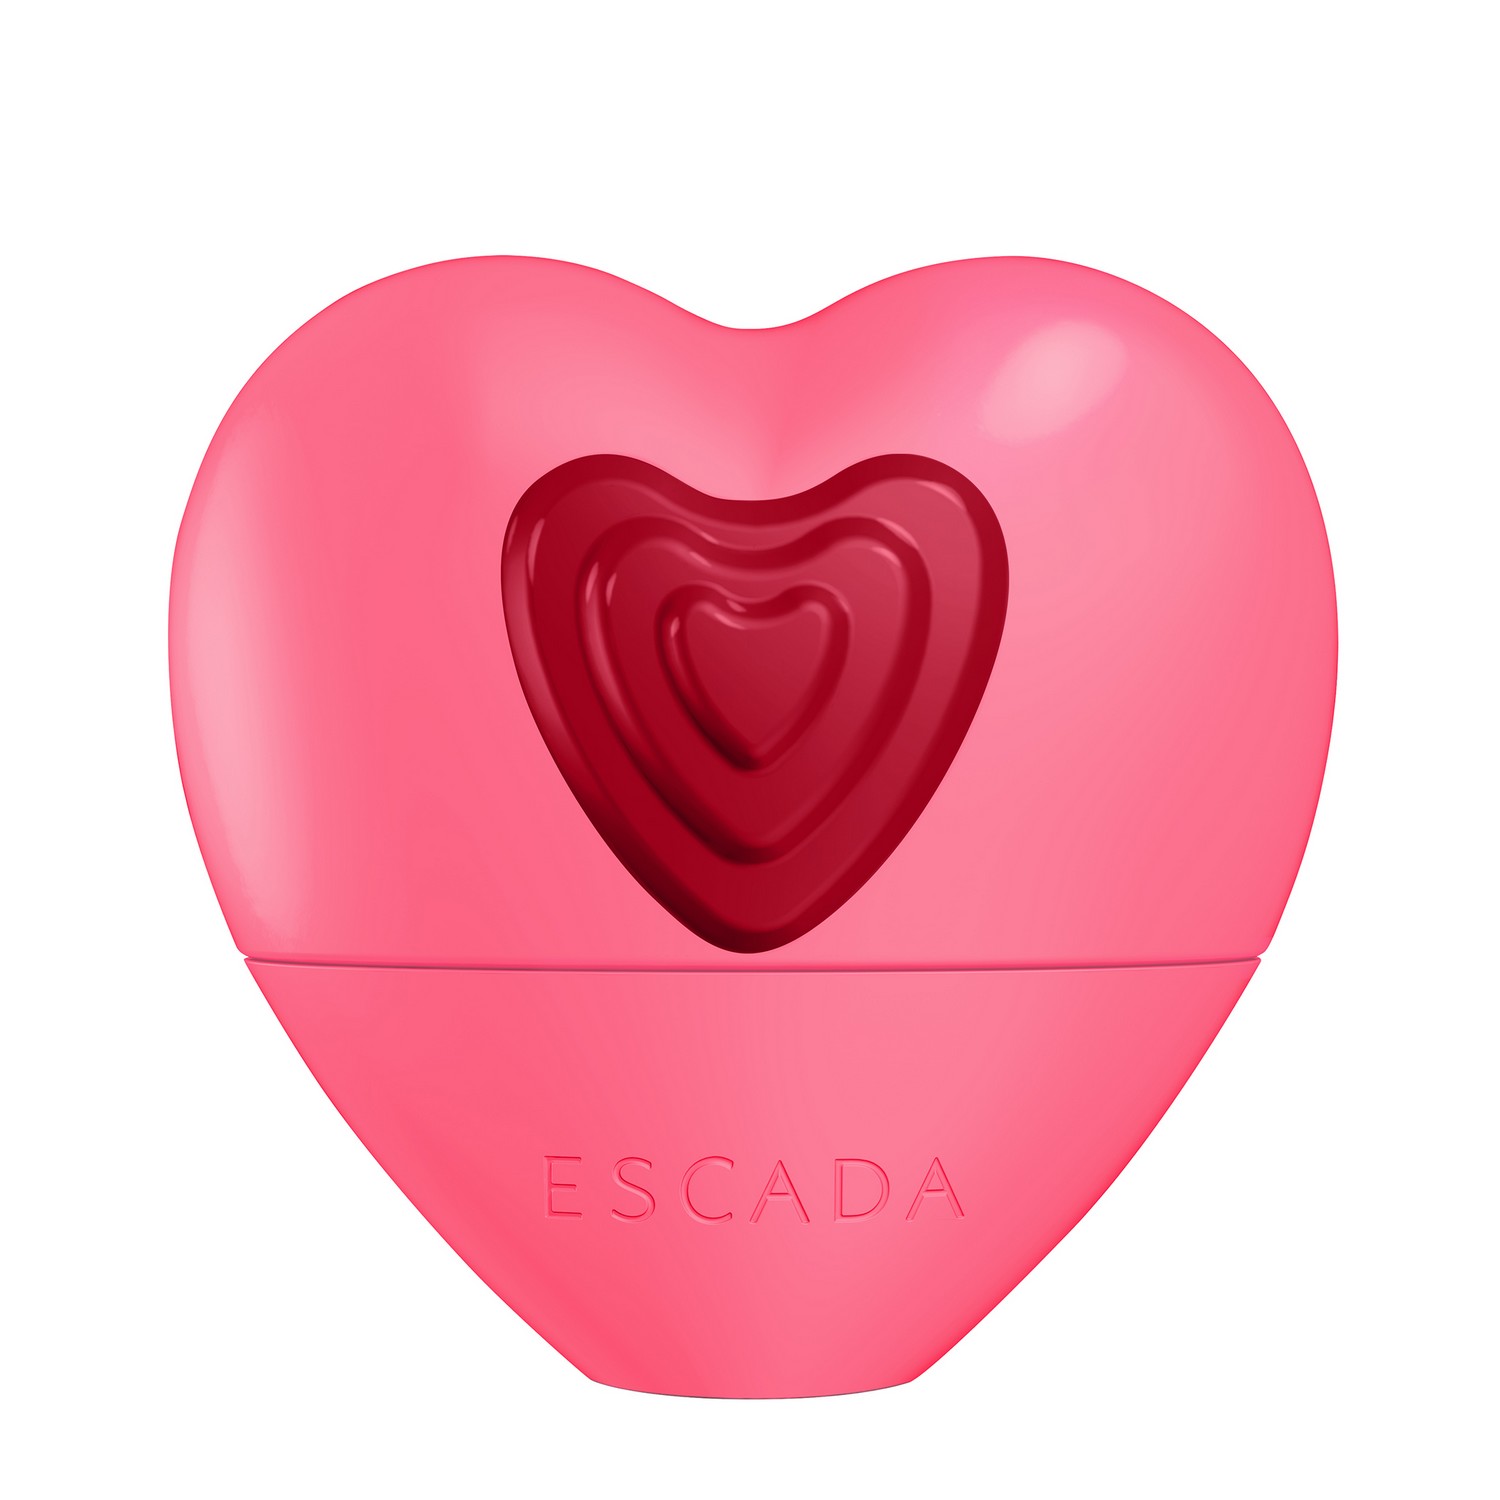 Escada Candy Love Limited Edition Eau de Toilette 50ml